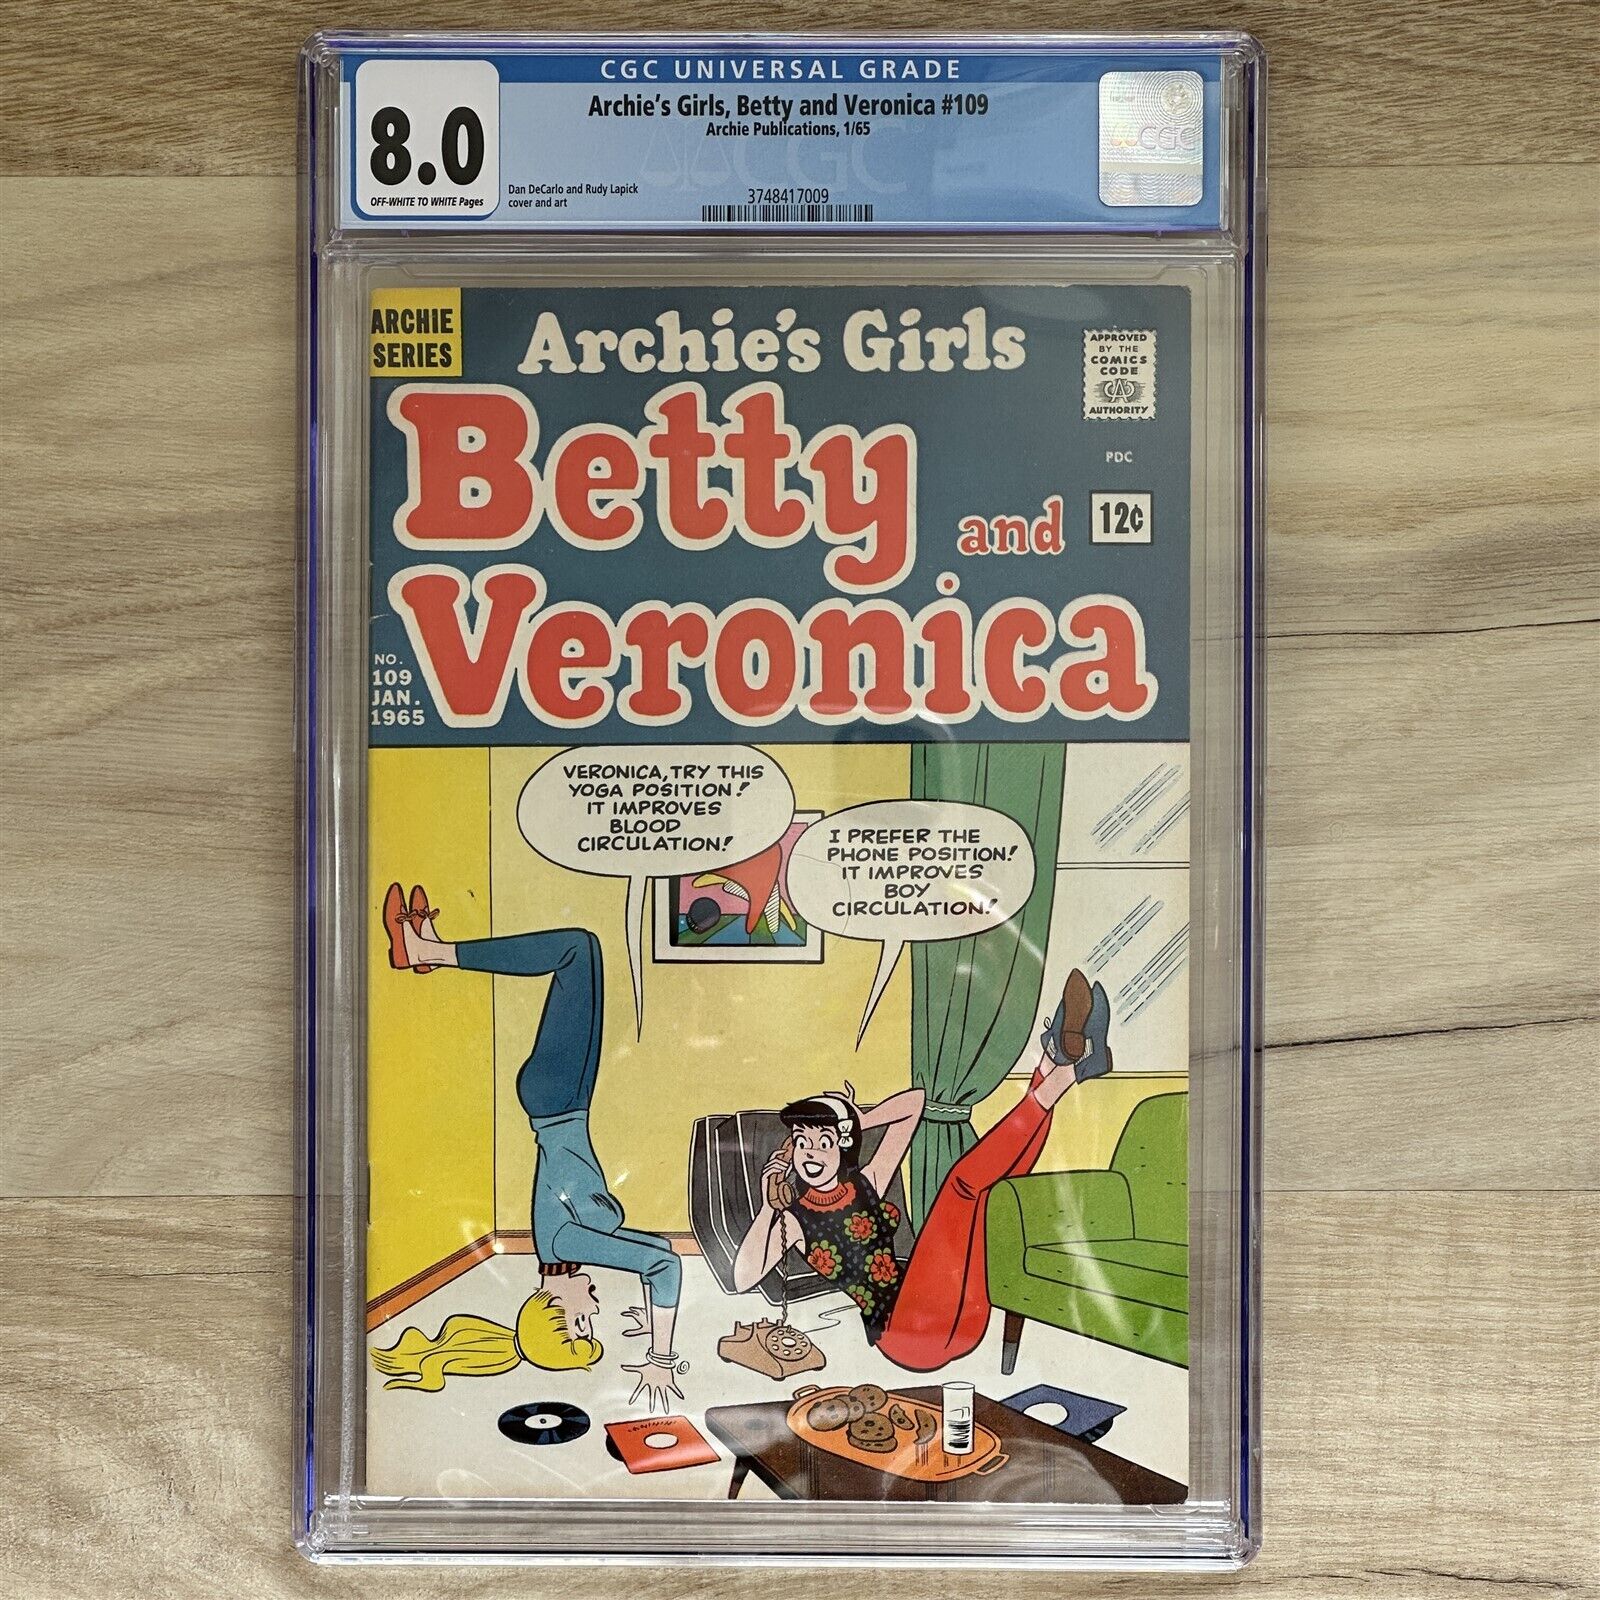 ARCHIE'S GIRLS BETTY & VERONICA #109 1965 CGC 8.0 VF DAN DECARLO HEADLIGHTS GGA